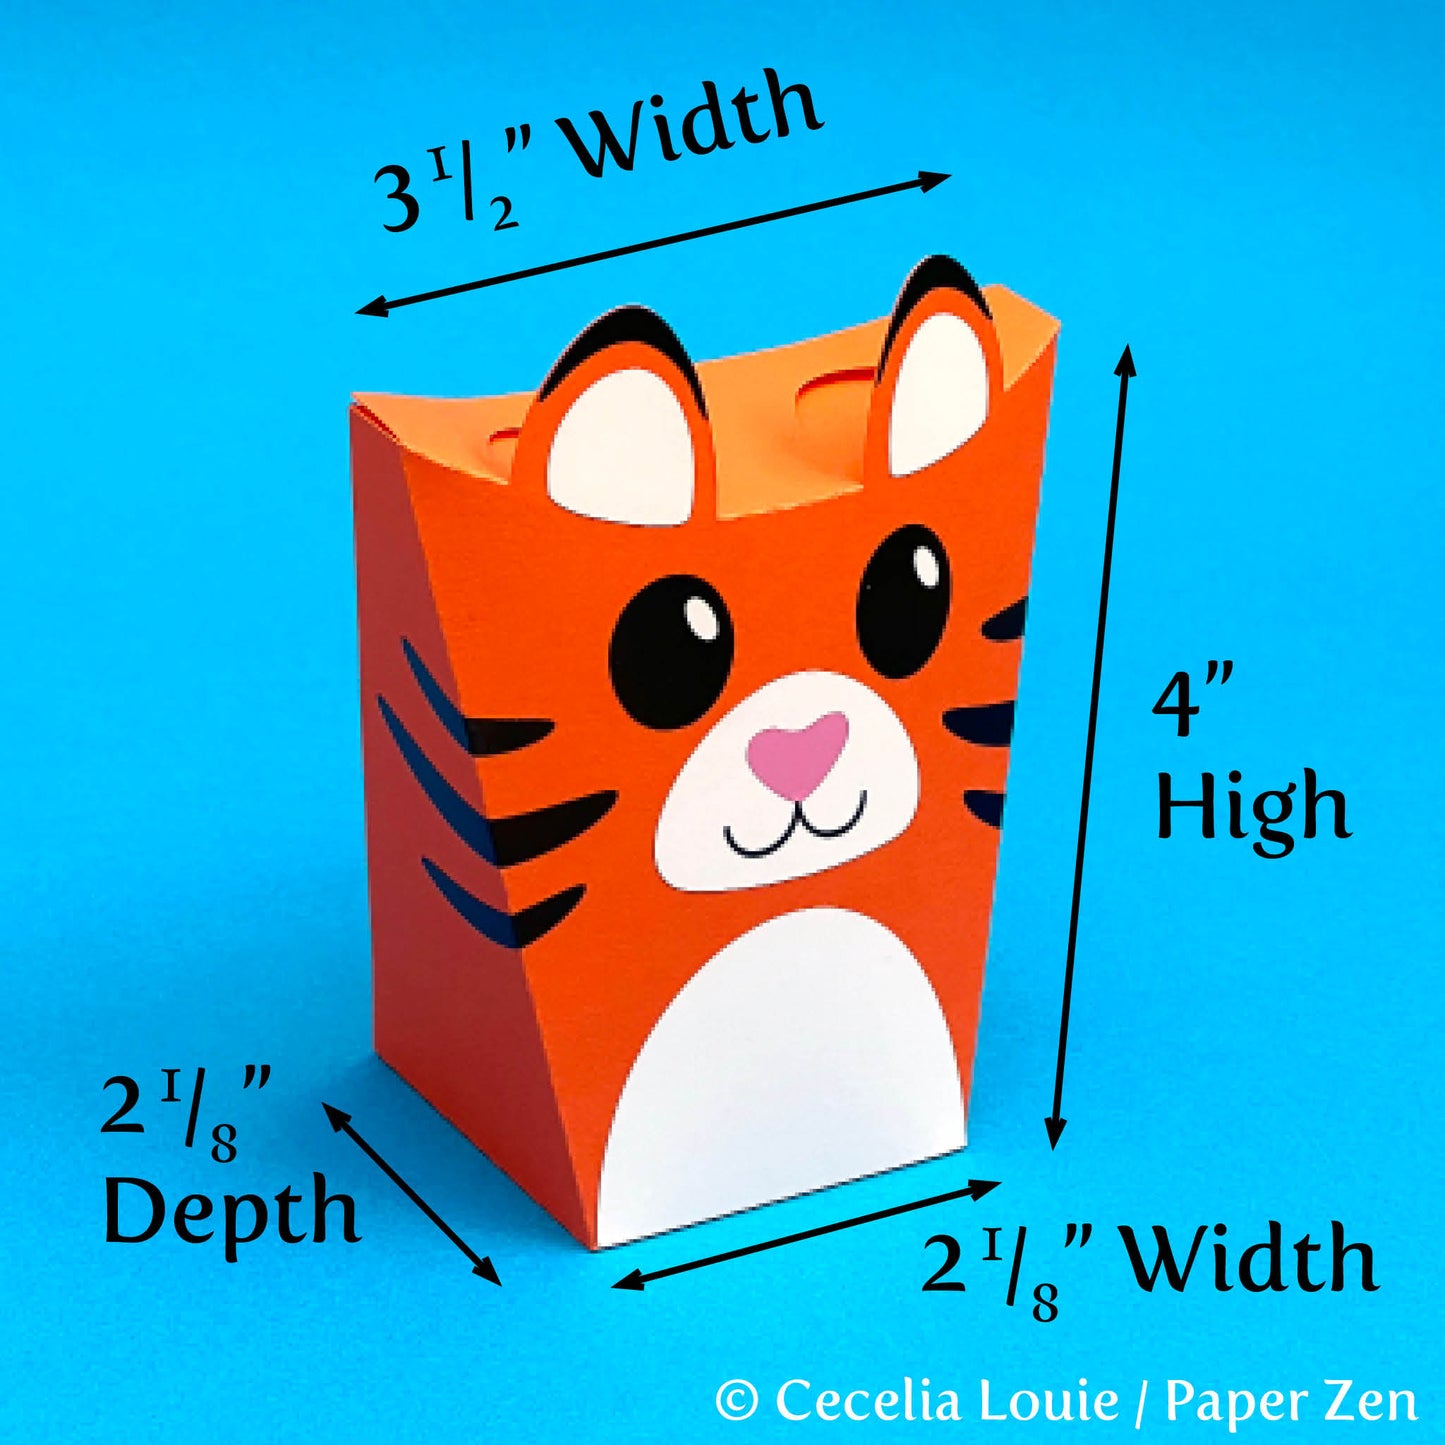 Tiger Gift Box - PDF